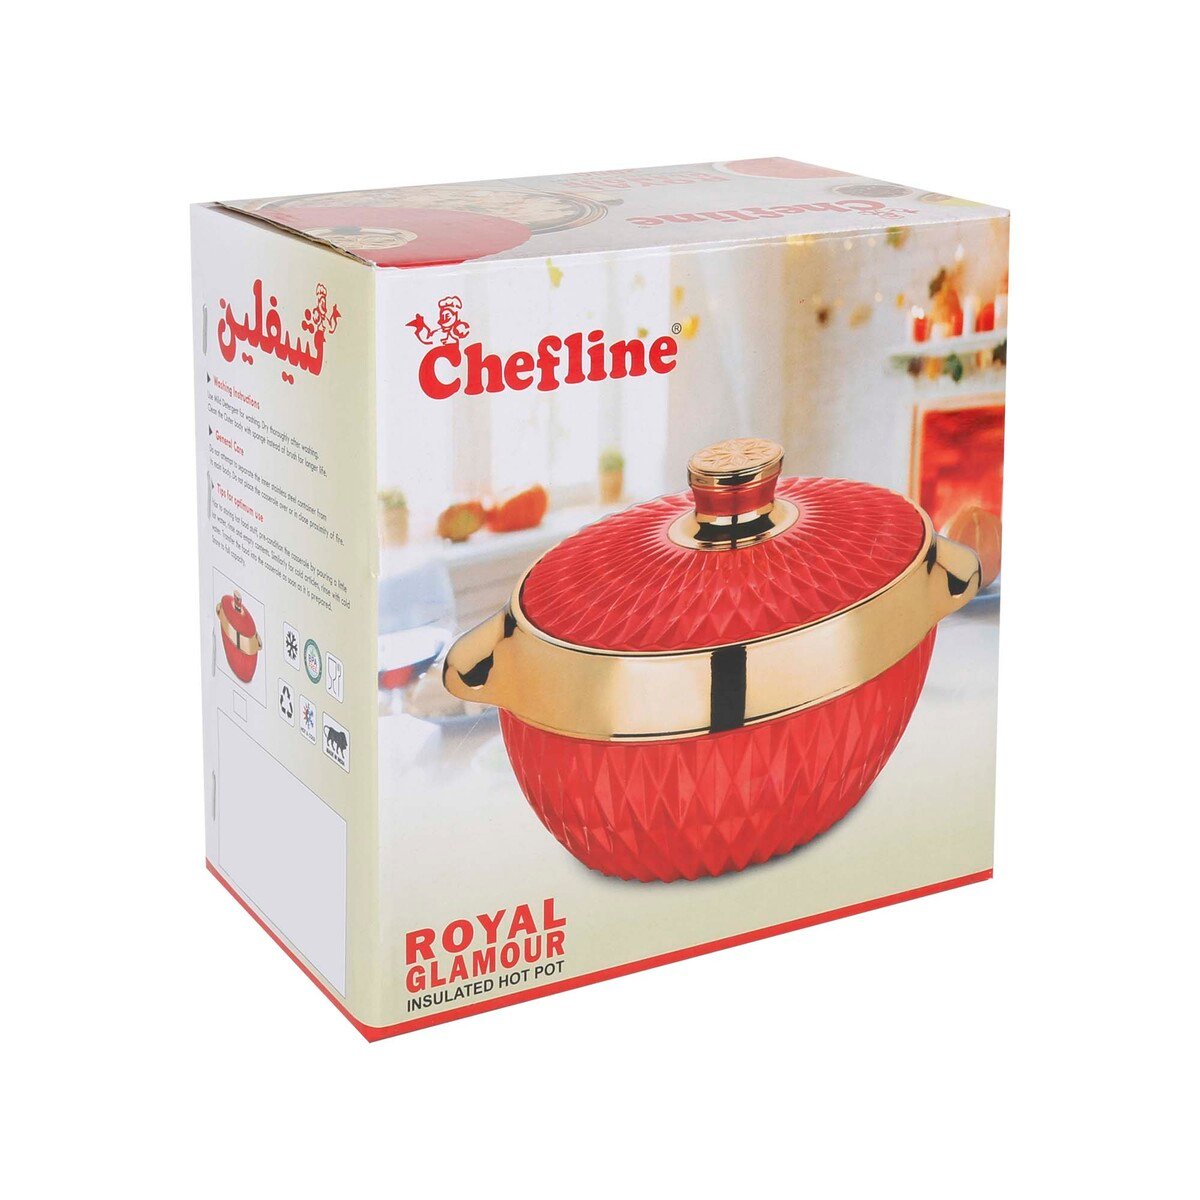 Chefline Plastic Insulated Hot Pot Royal Glamour, 2000 ml